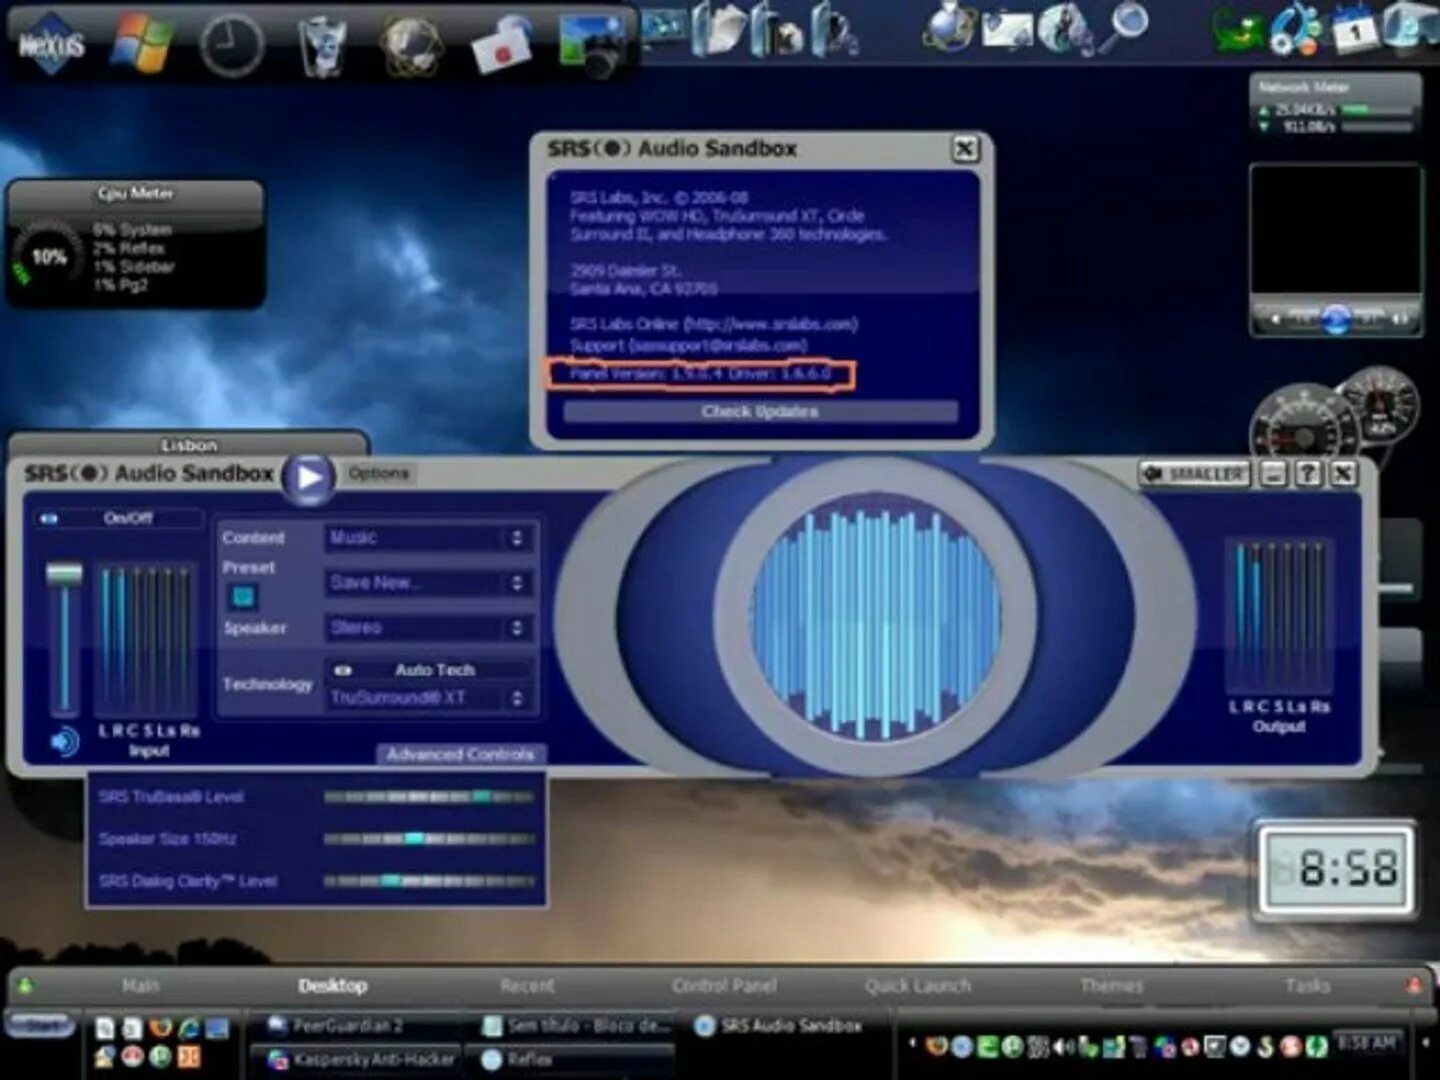 SRS Audio Sandbox 1.10.2.0. SRS Audio Sandbox Windows. SRS Audio Essentials. Программы для усиления звука на ПК. Программы для улучшения звука микрофона